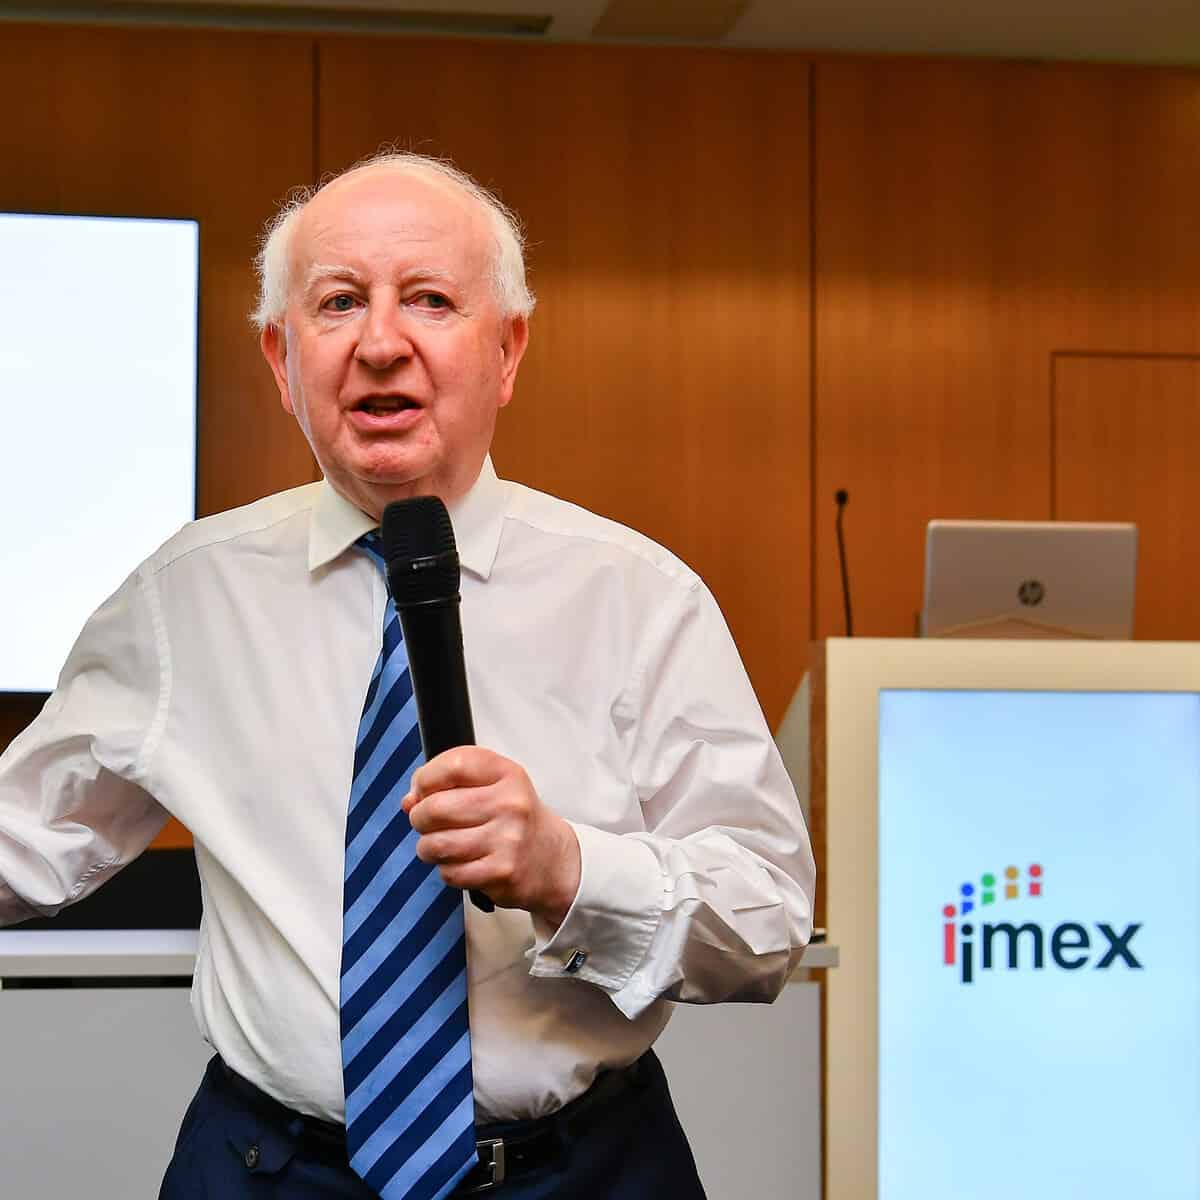 Camaraderie, optimism and fortitude mark 20 years of IMEX in Frankfurt